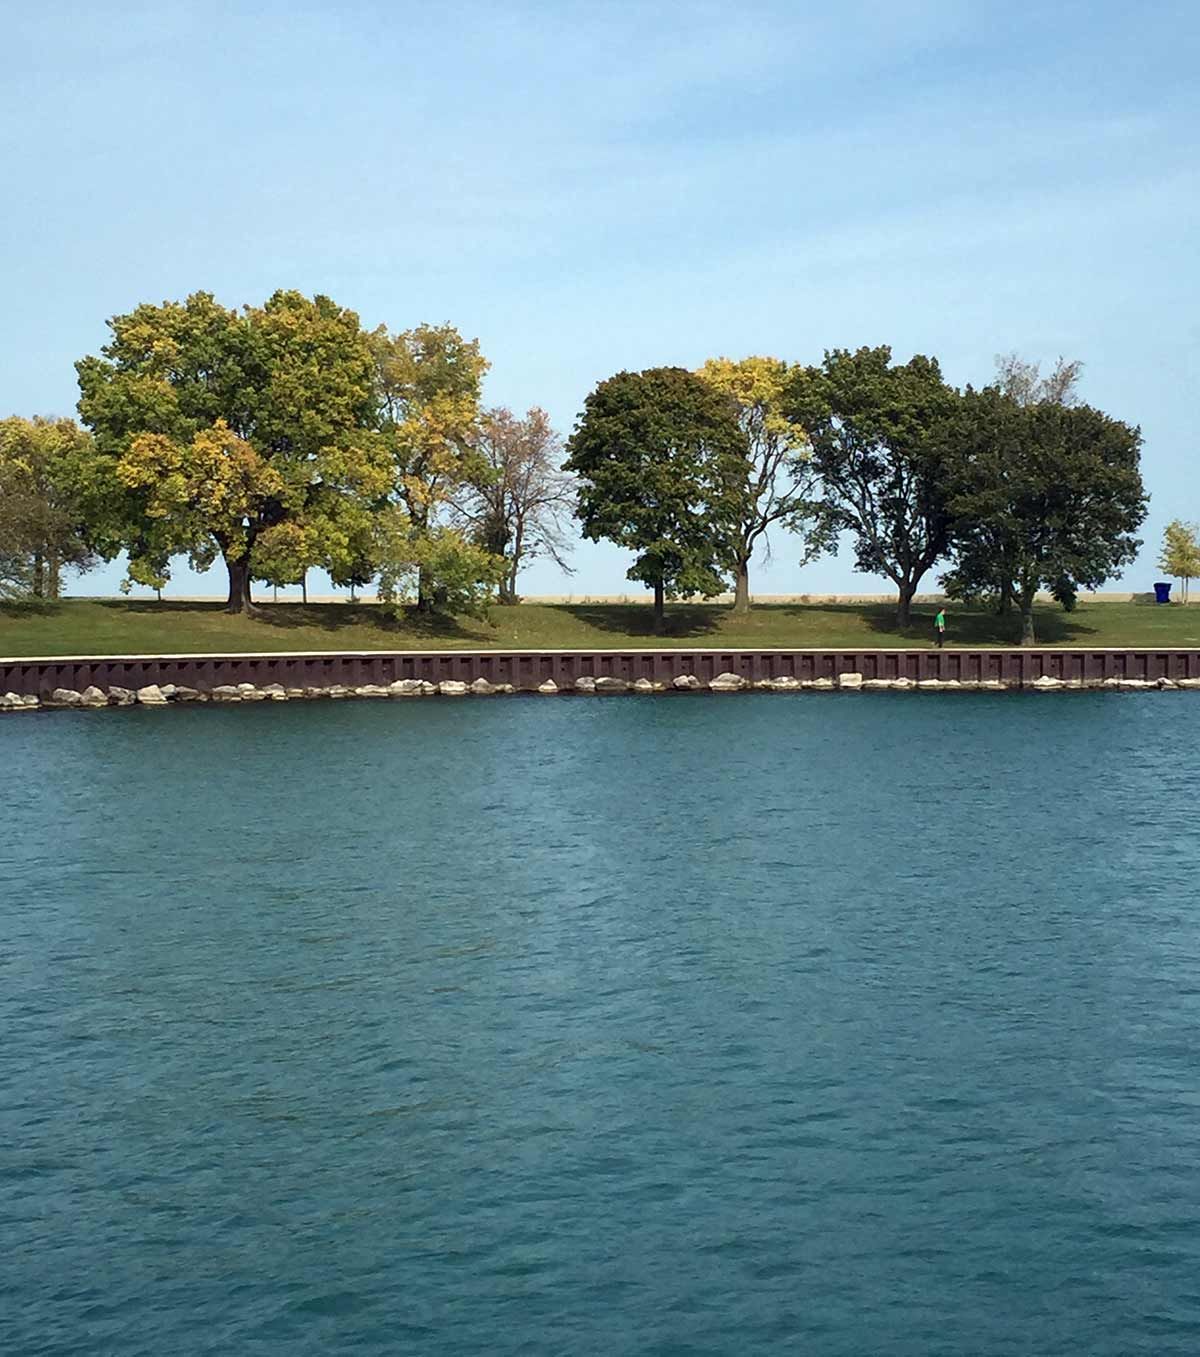 Lake Michigan/Belmont Harbor